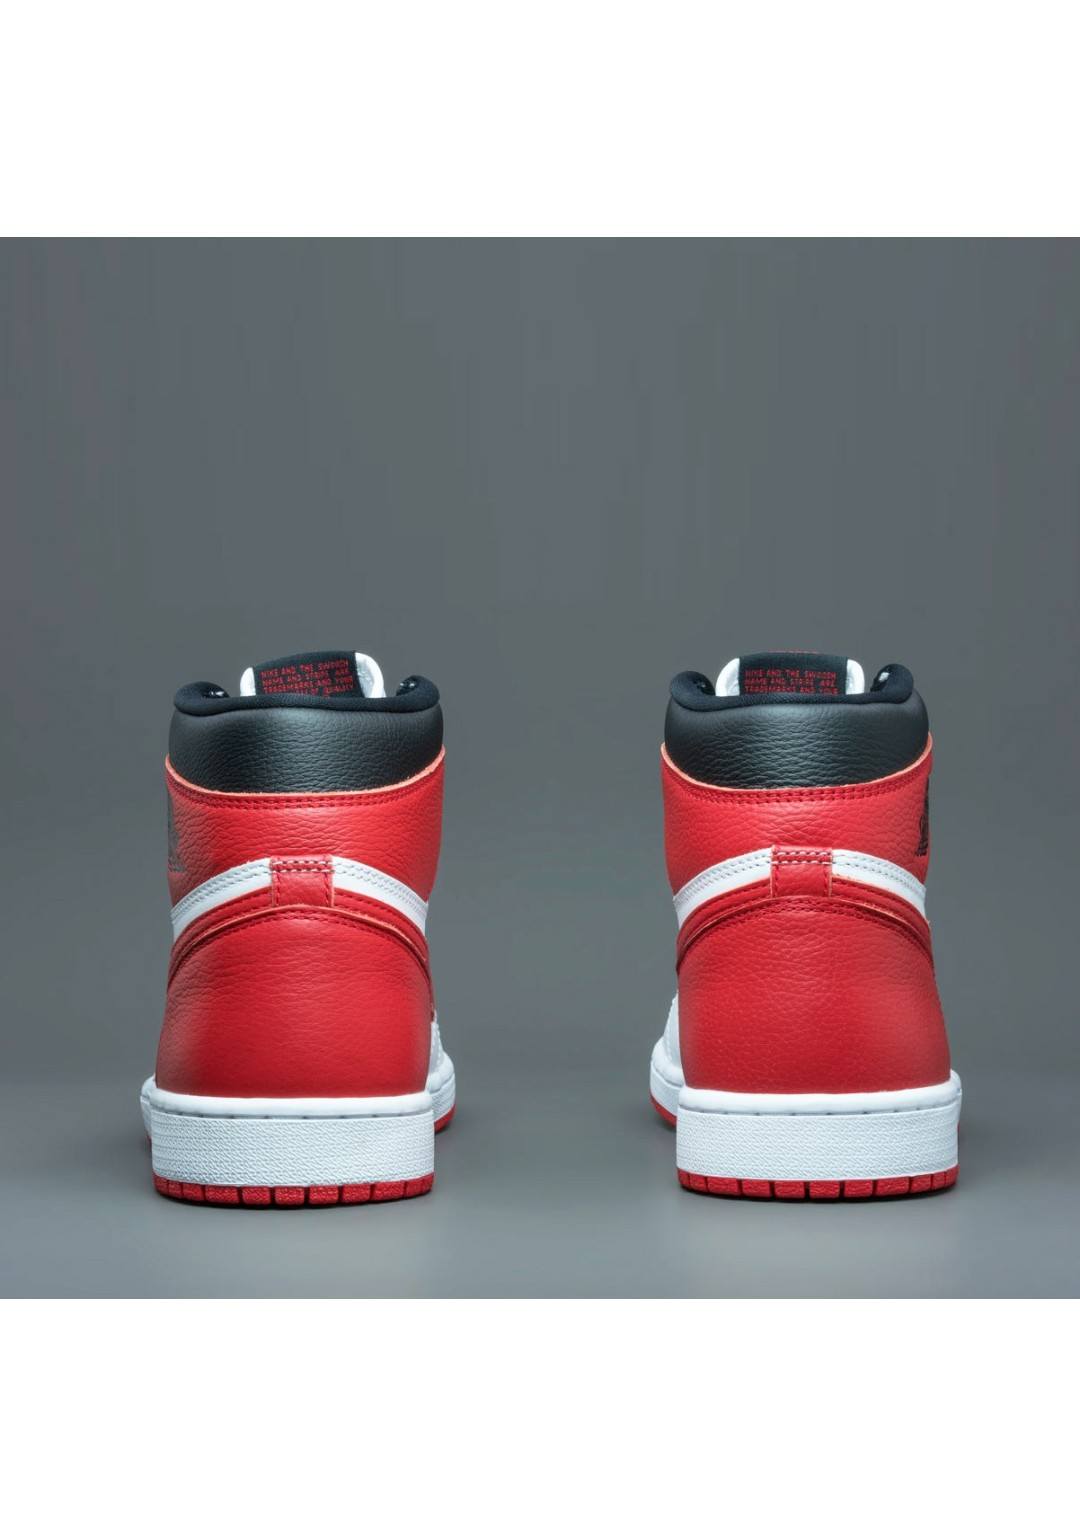 Nike Jordan 1 retro high